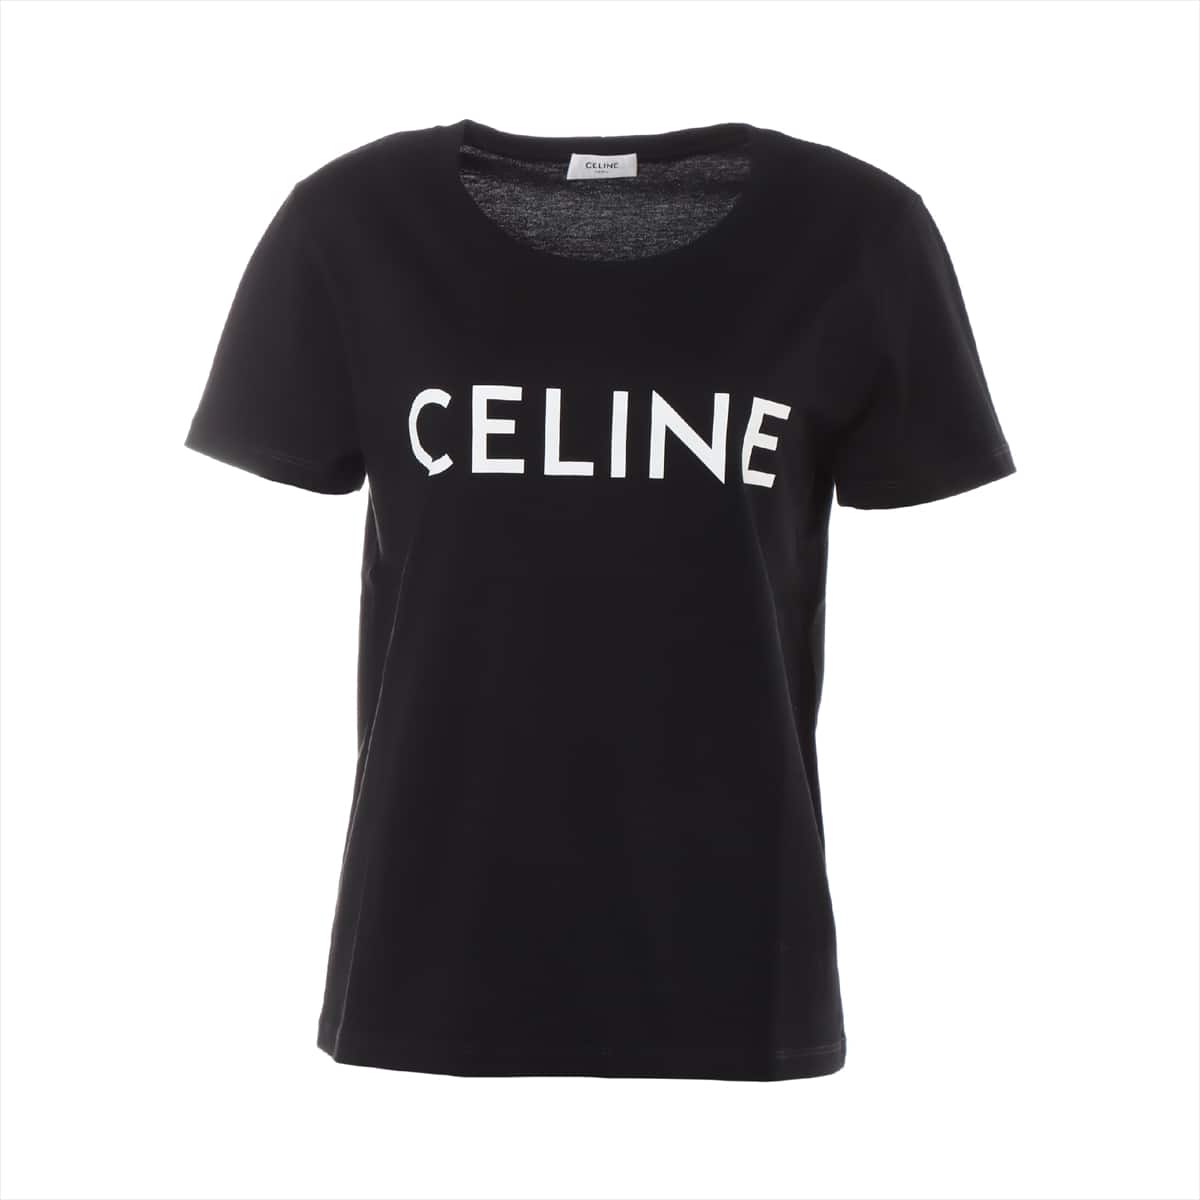 Celine ロゴ黒Tシャツ